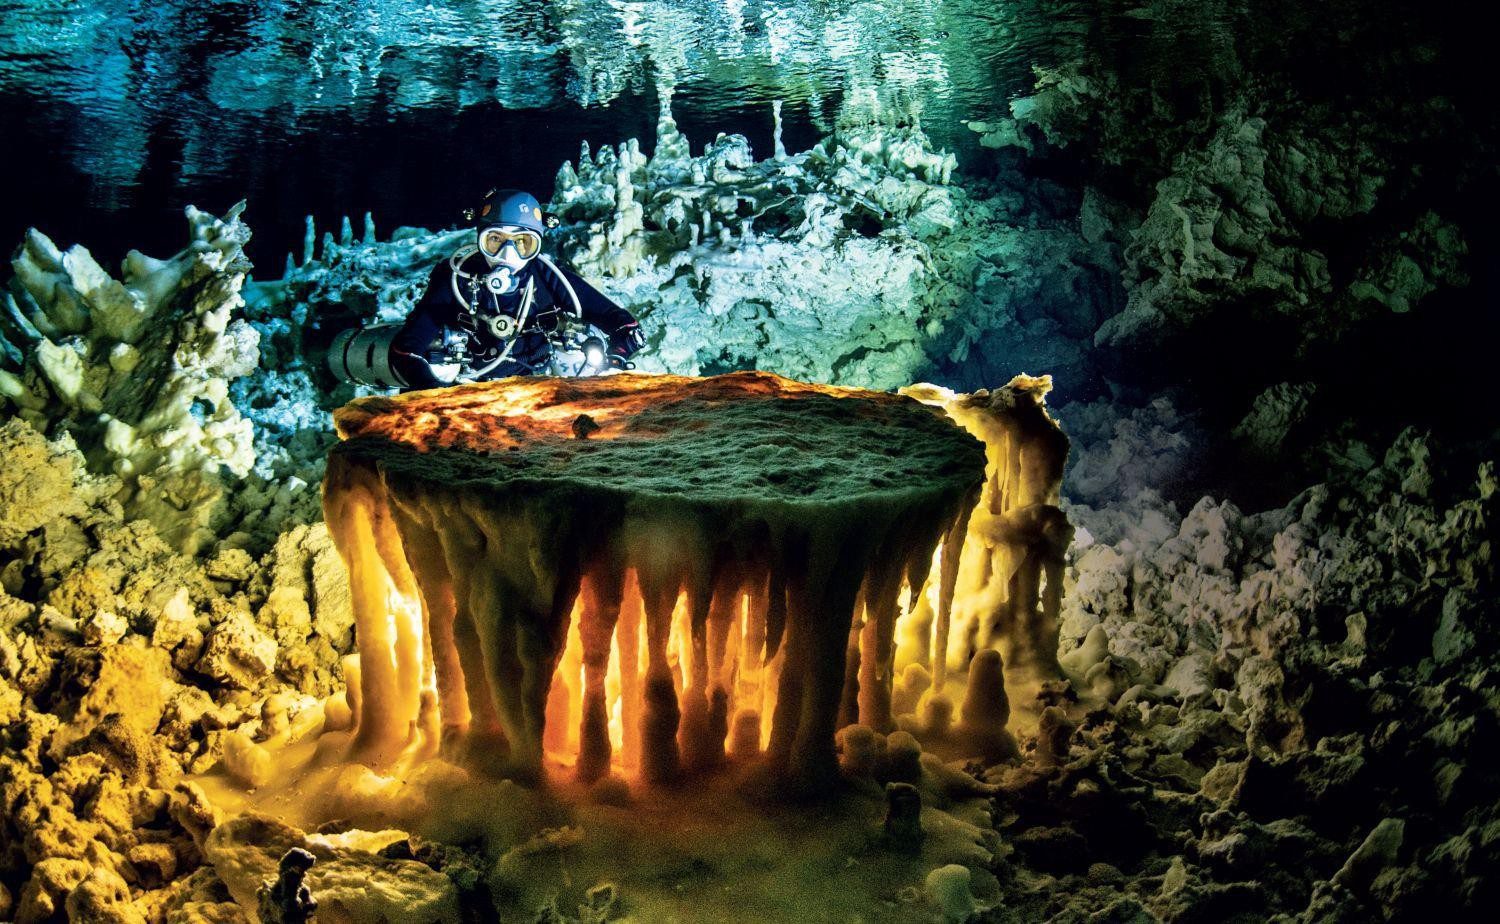 Sulawesi's underwater cave